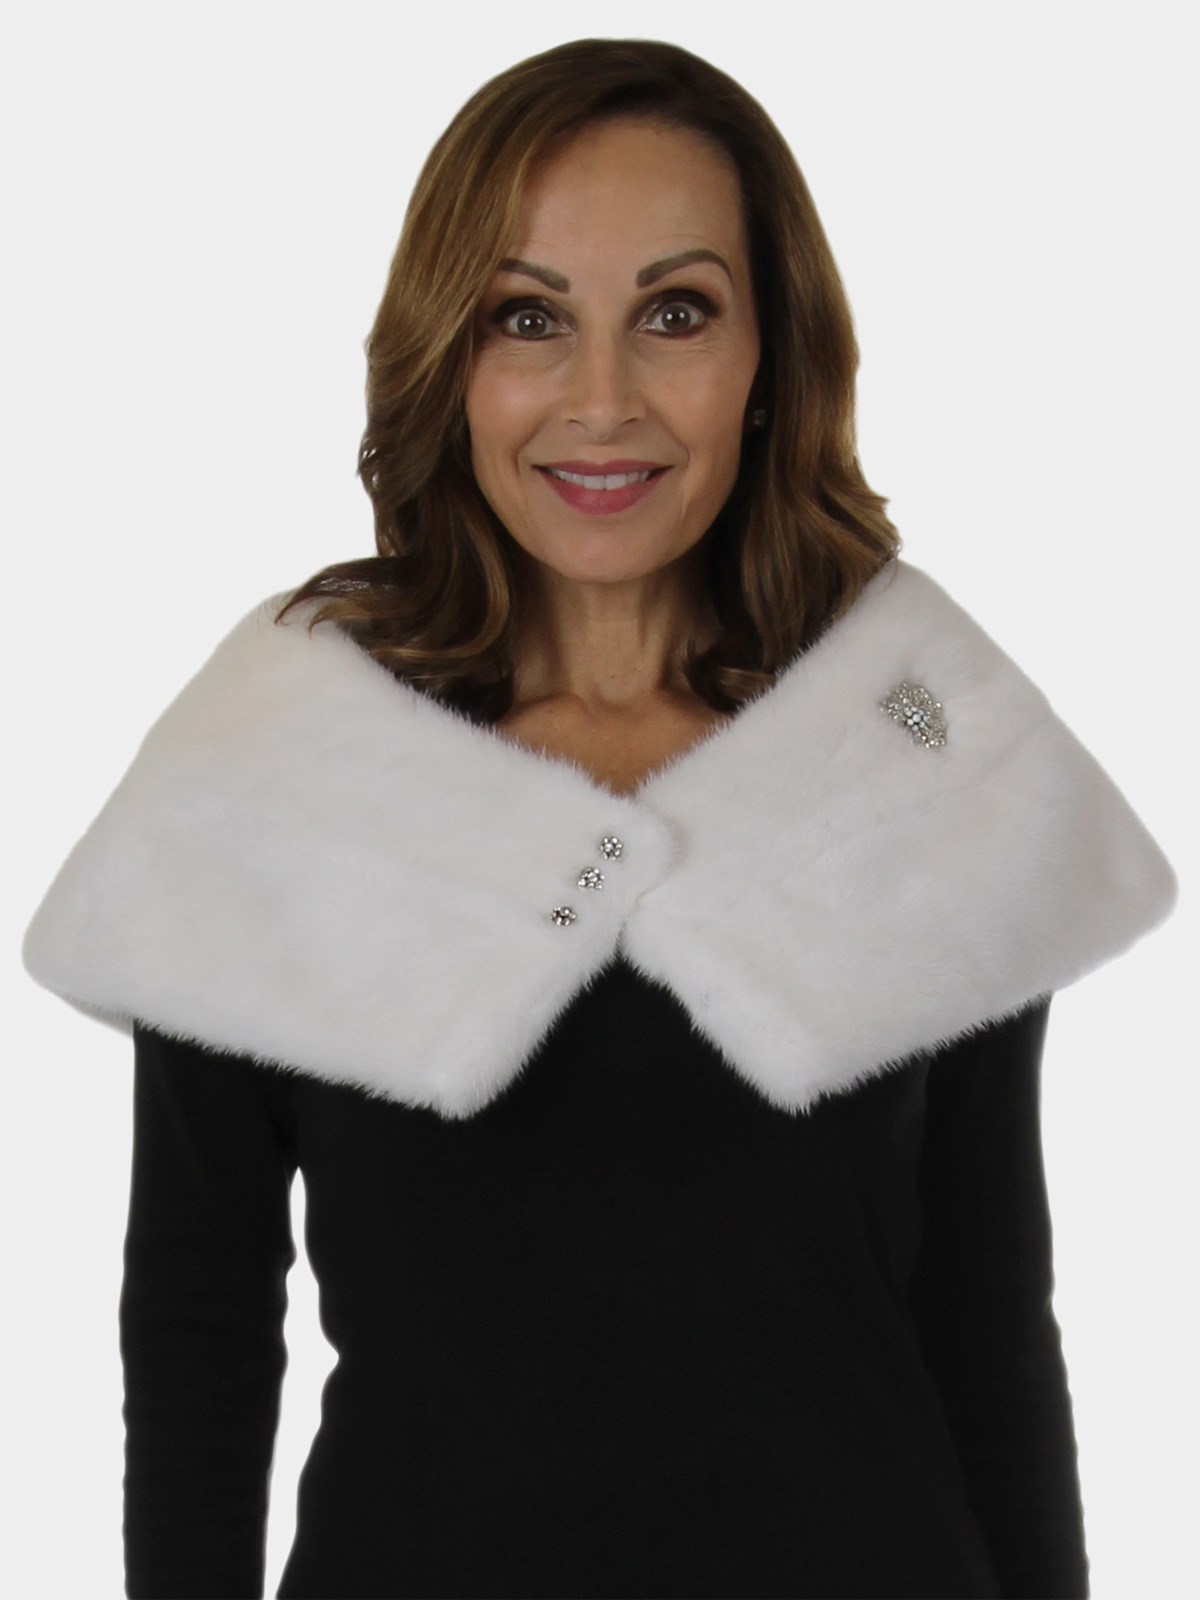 Woman's New Carolyn Rowan White Robie Mink Fur Stole